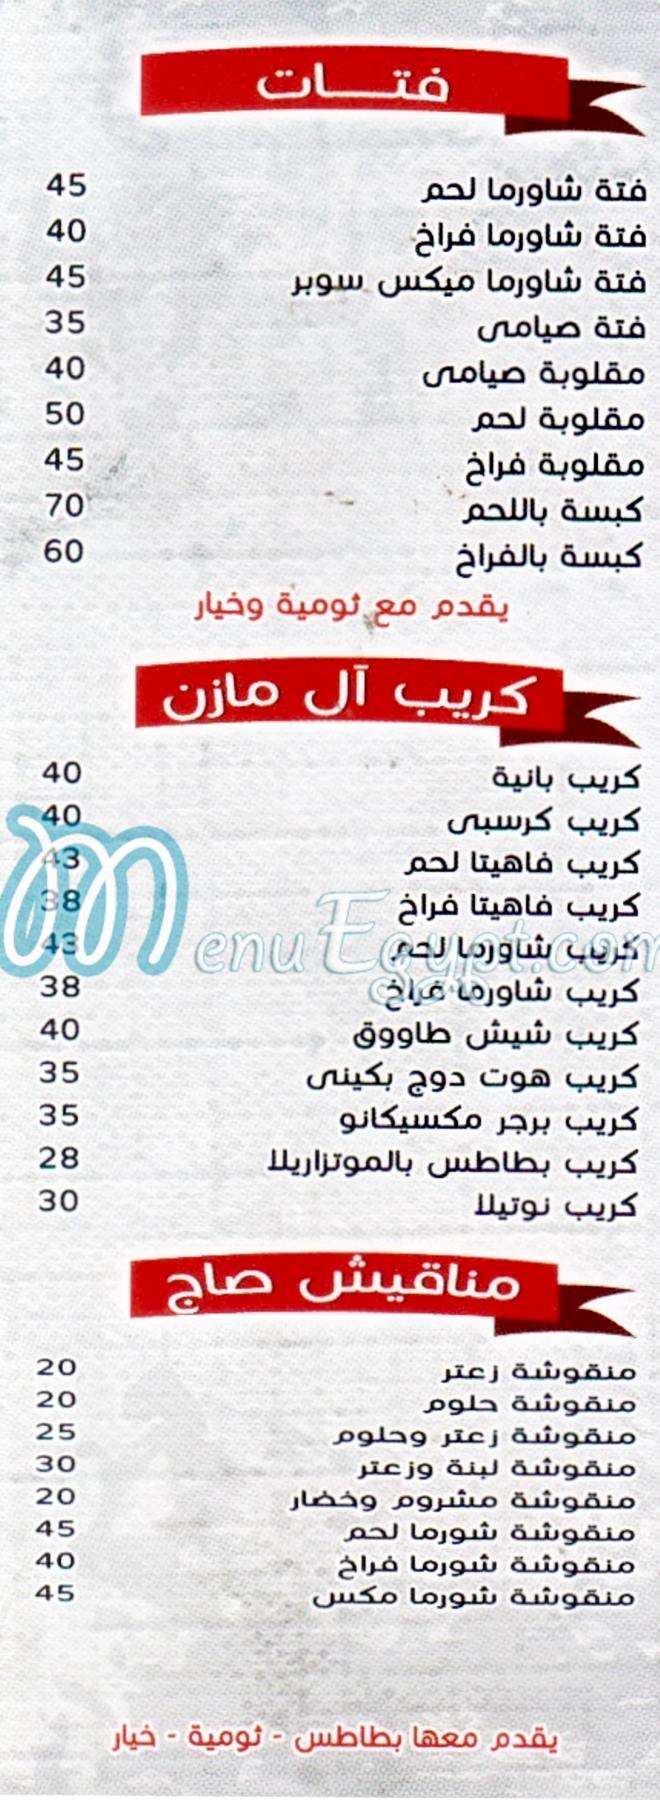 Shawrma Al Mazen menu Egypt